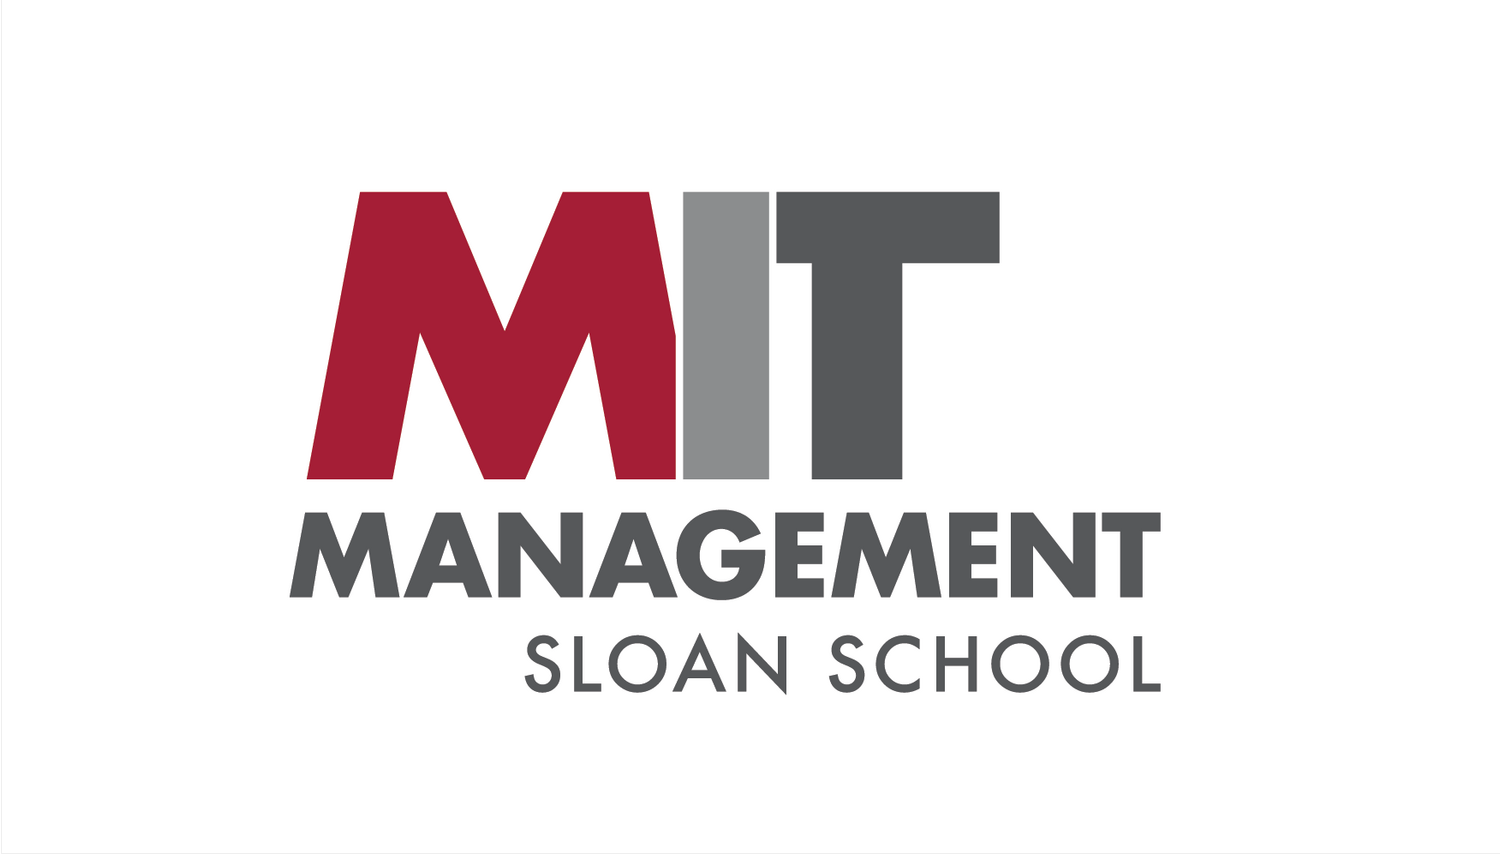 Logo for MIT Management Sloan School